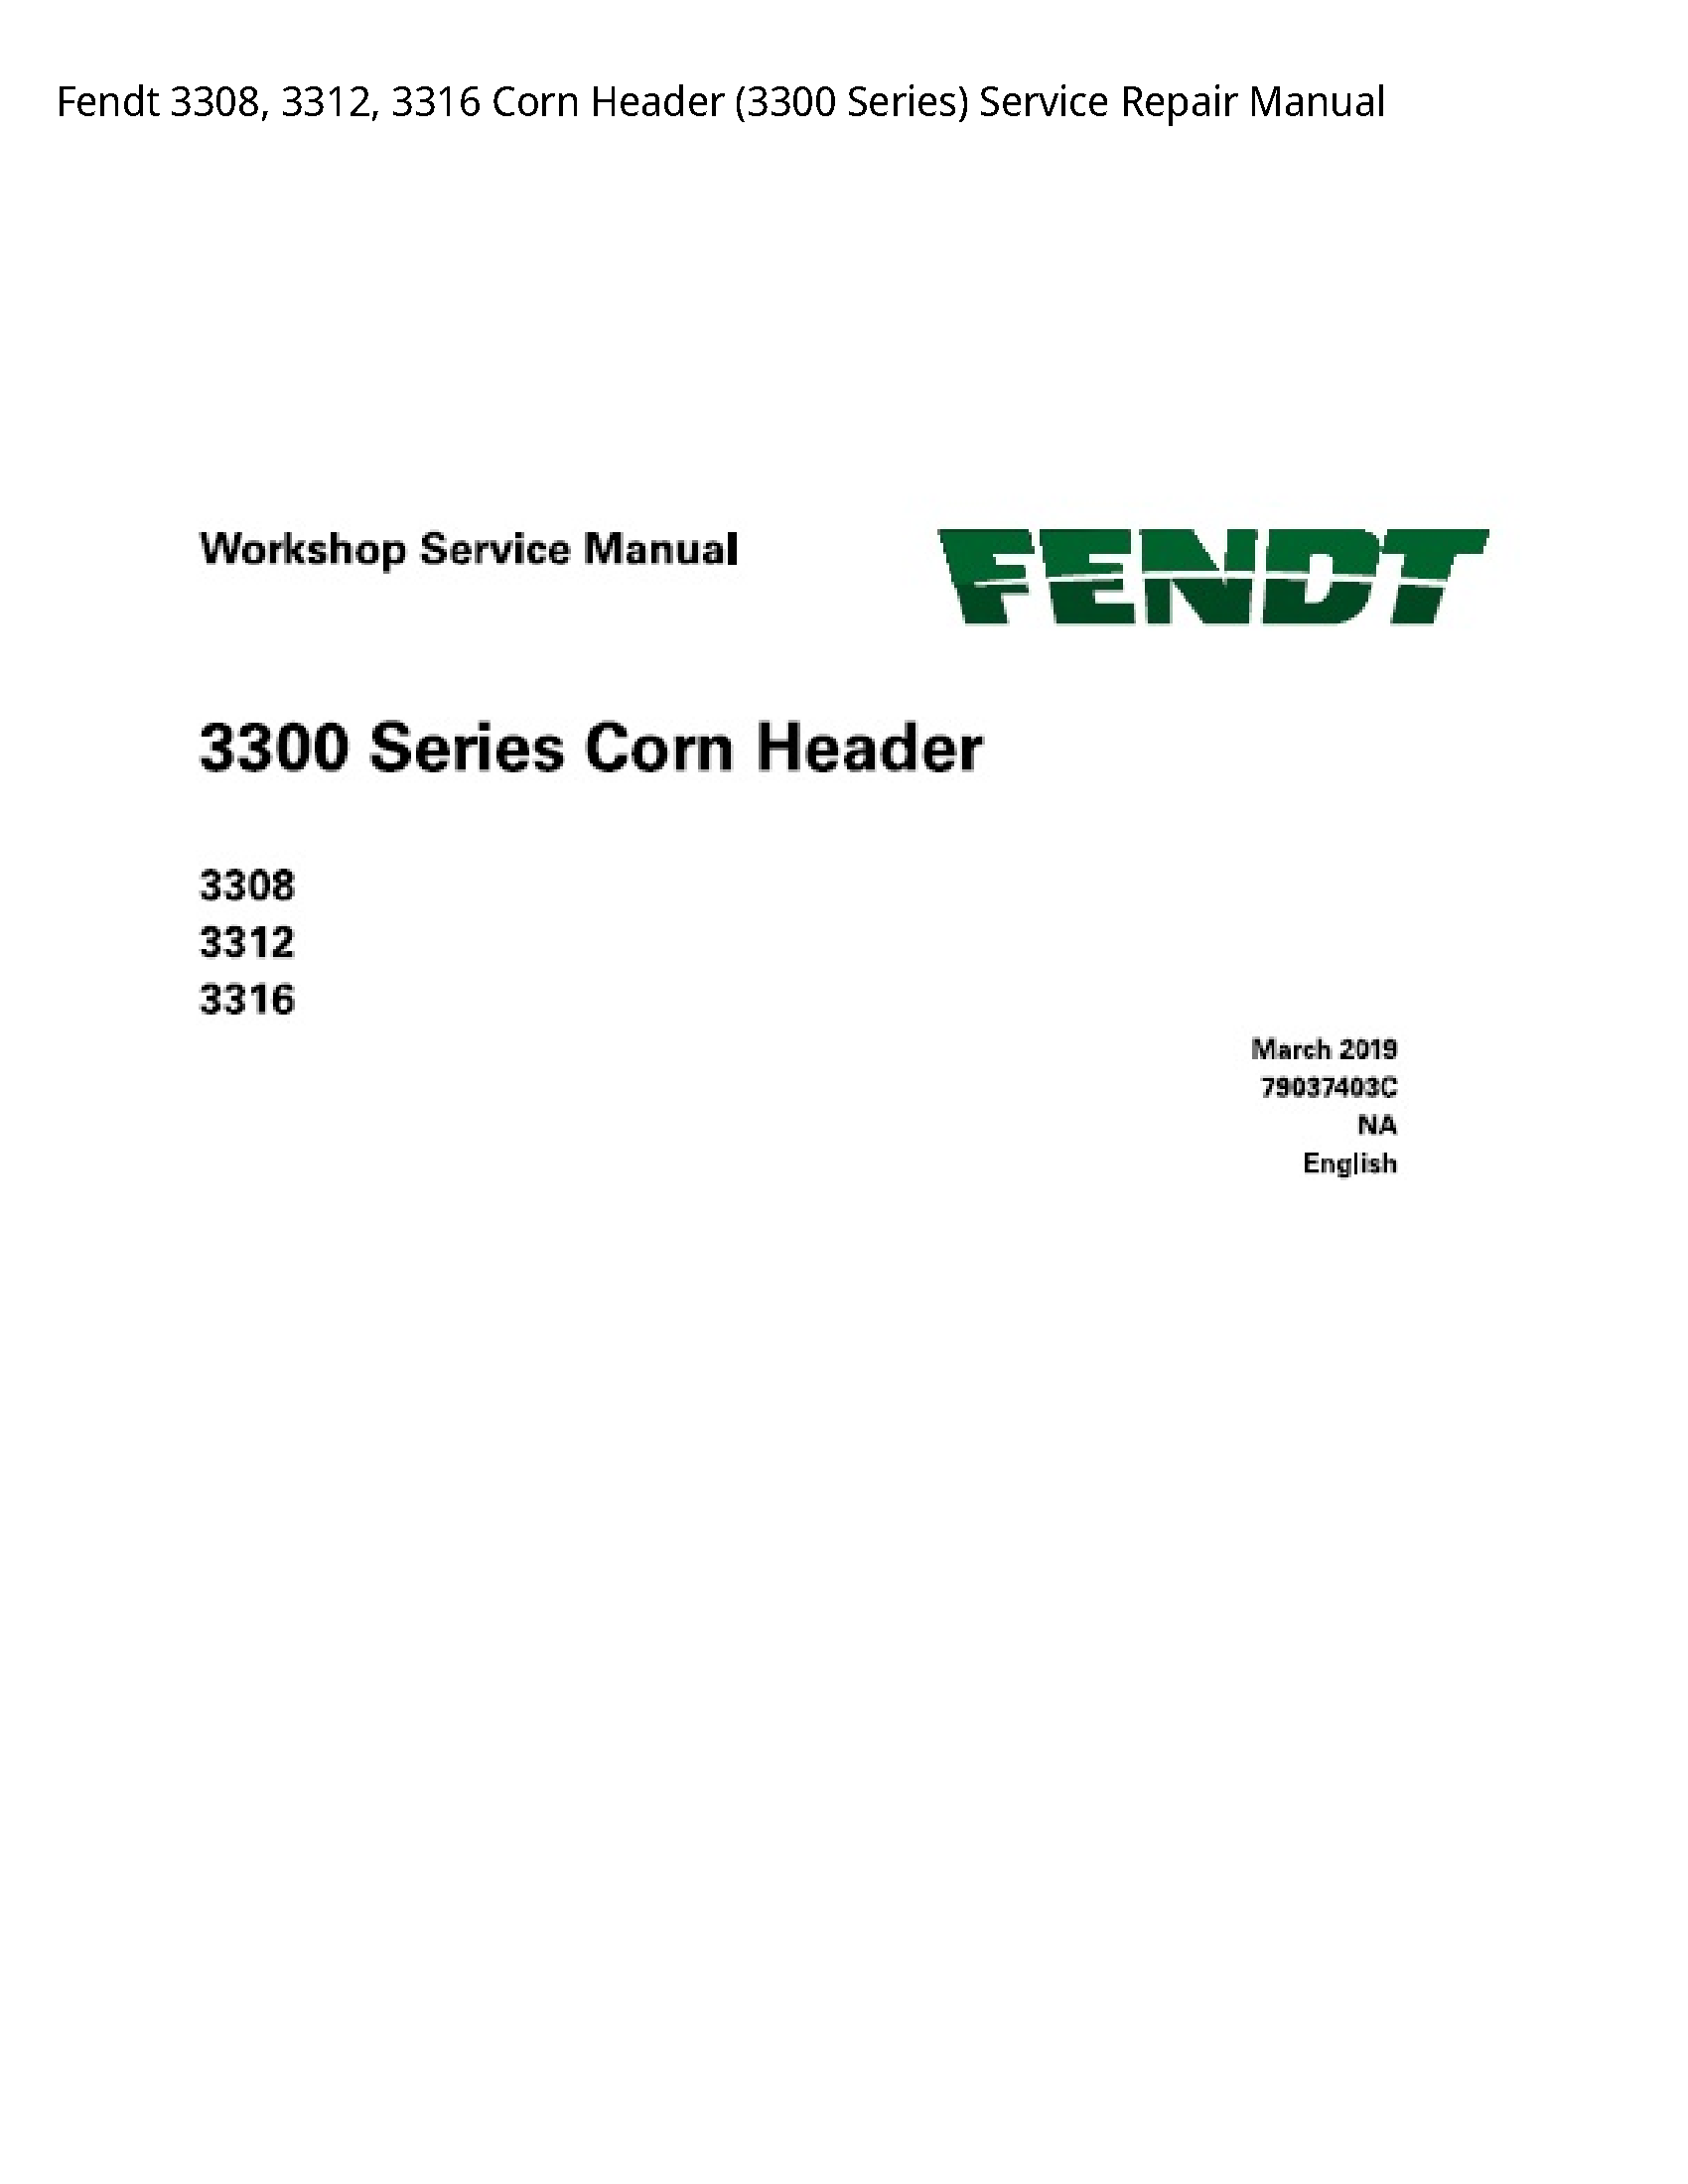 Fendt 3308 Corn Header Series) manual